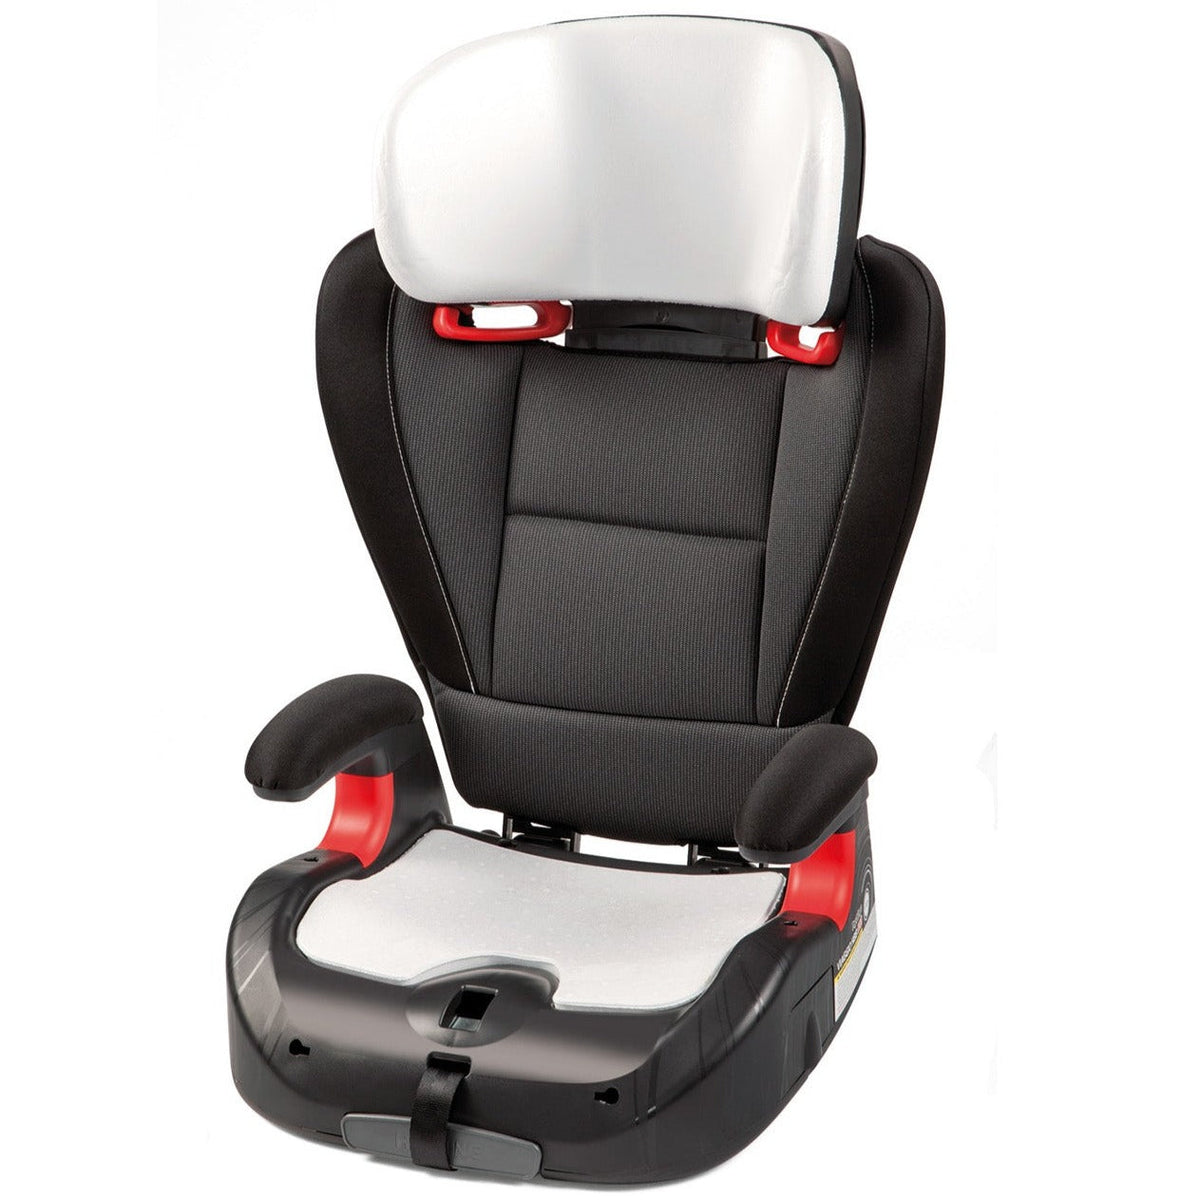 Peg Perego Viaggio HBB 120 Booster Car Seat